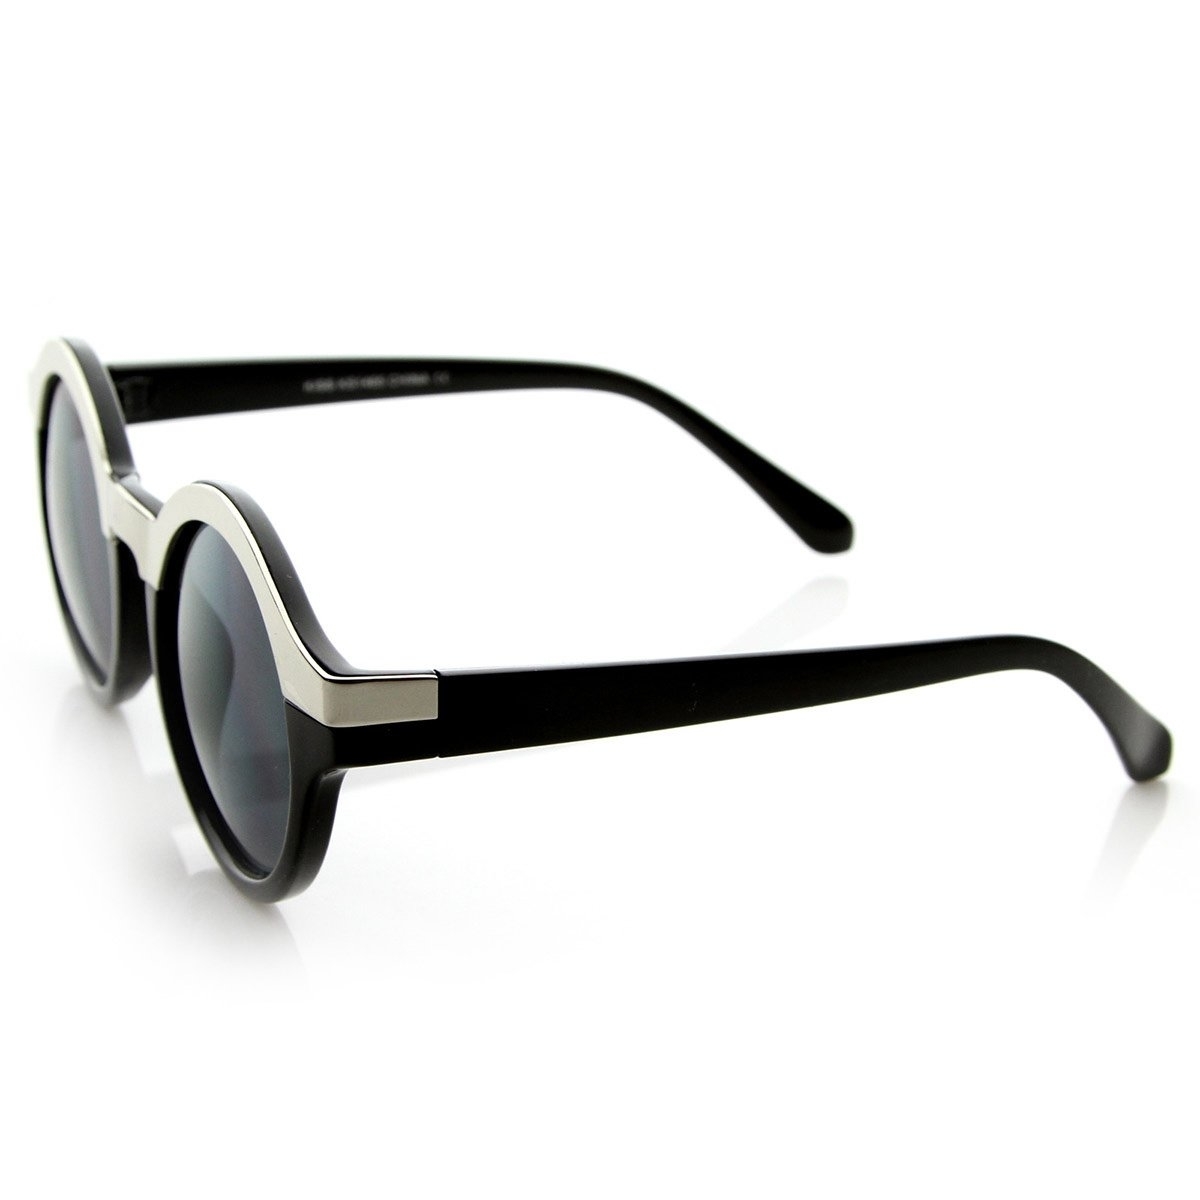 Vintage Inspired Retro Fashion Round Horned Circle Sunglasses - Black-Gold